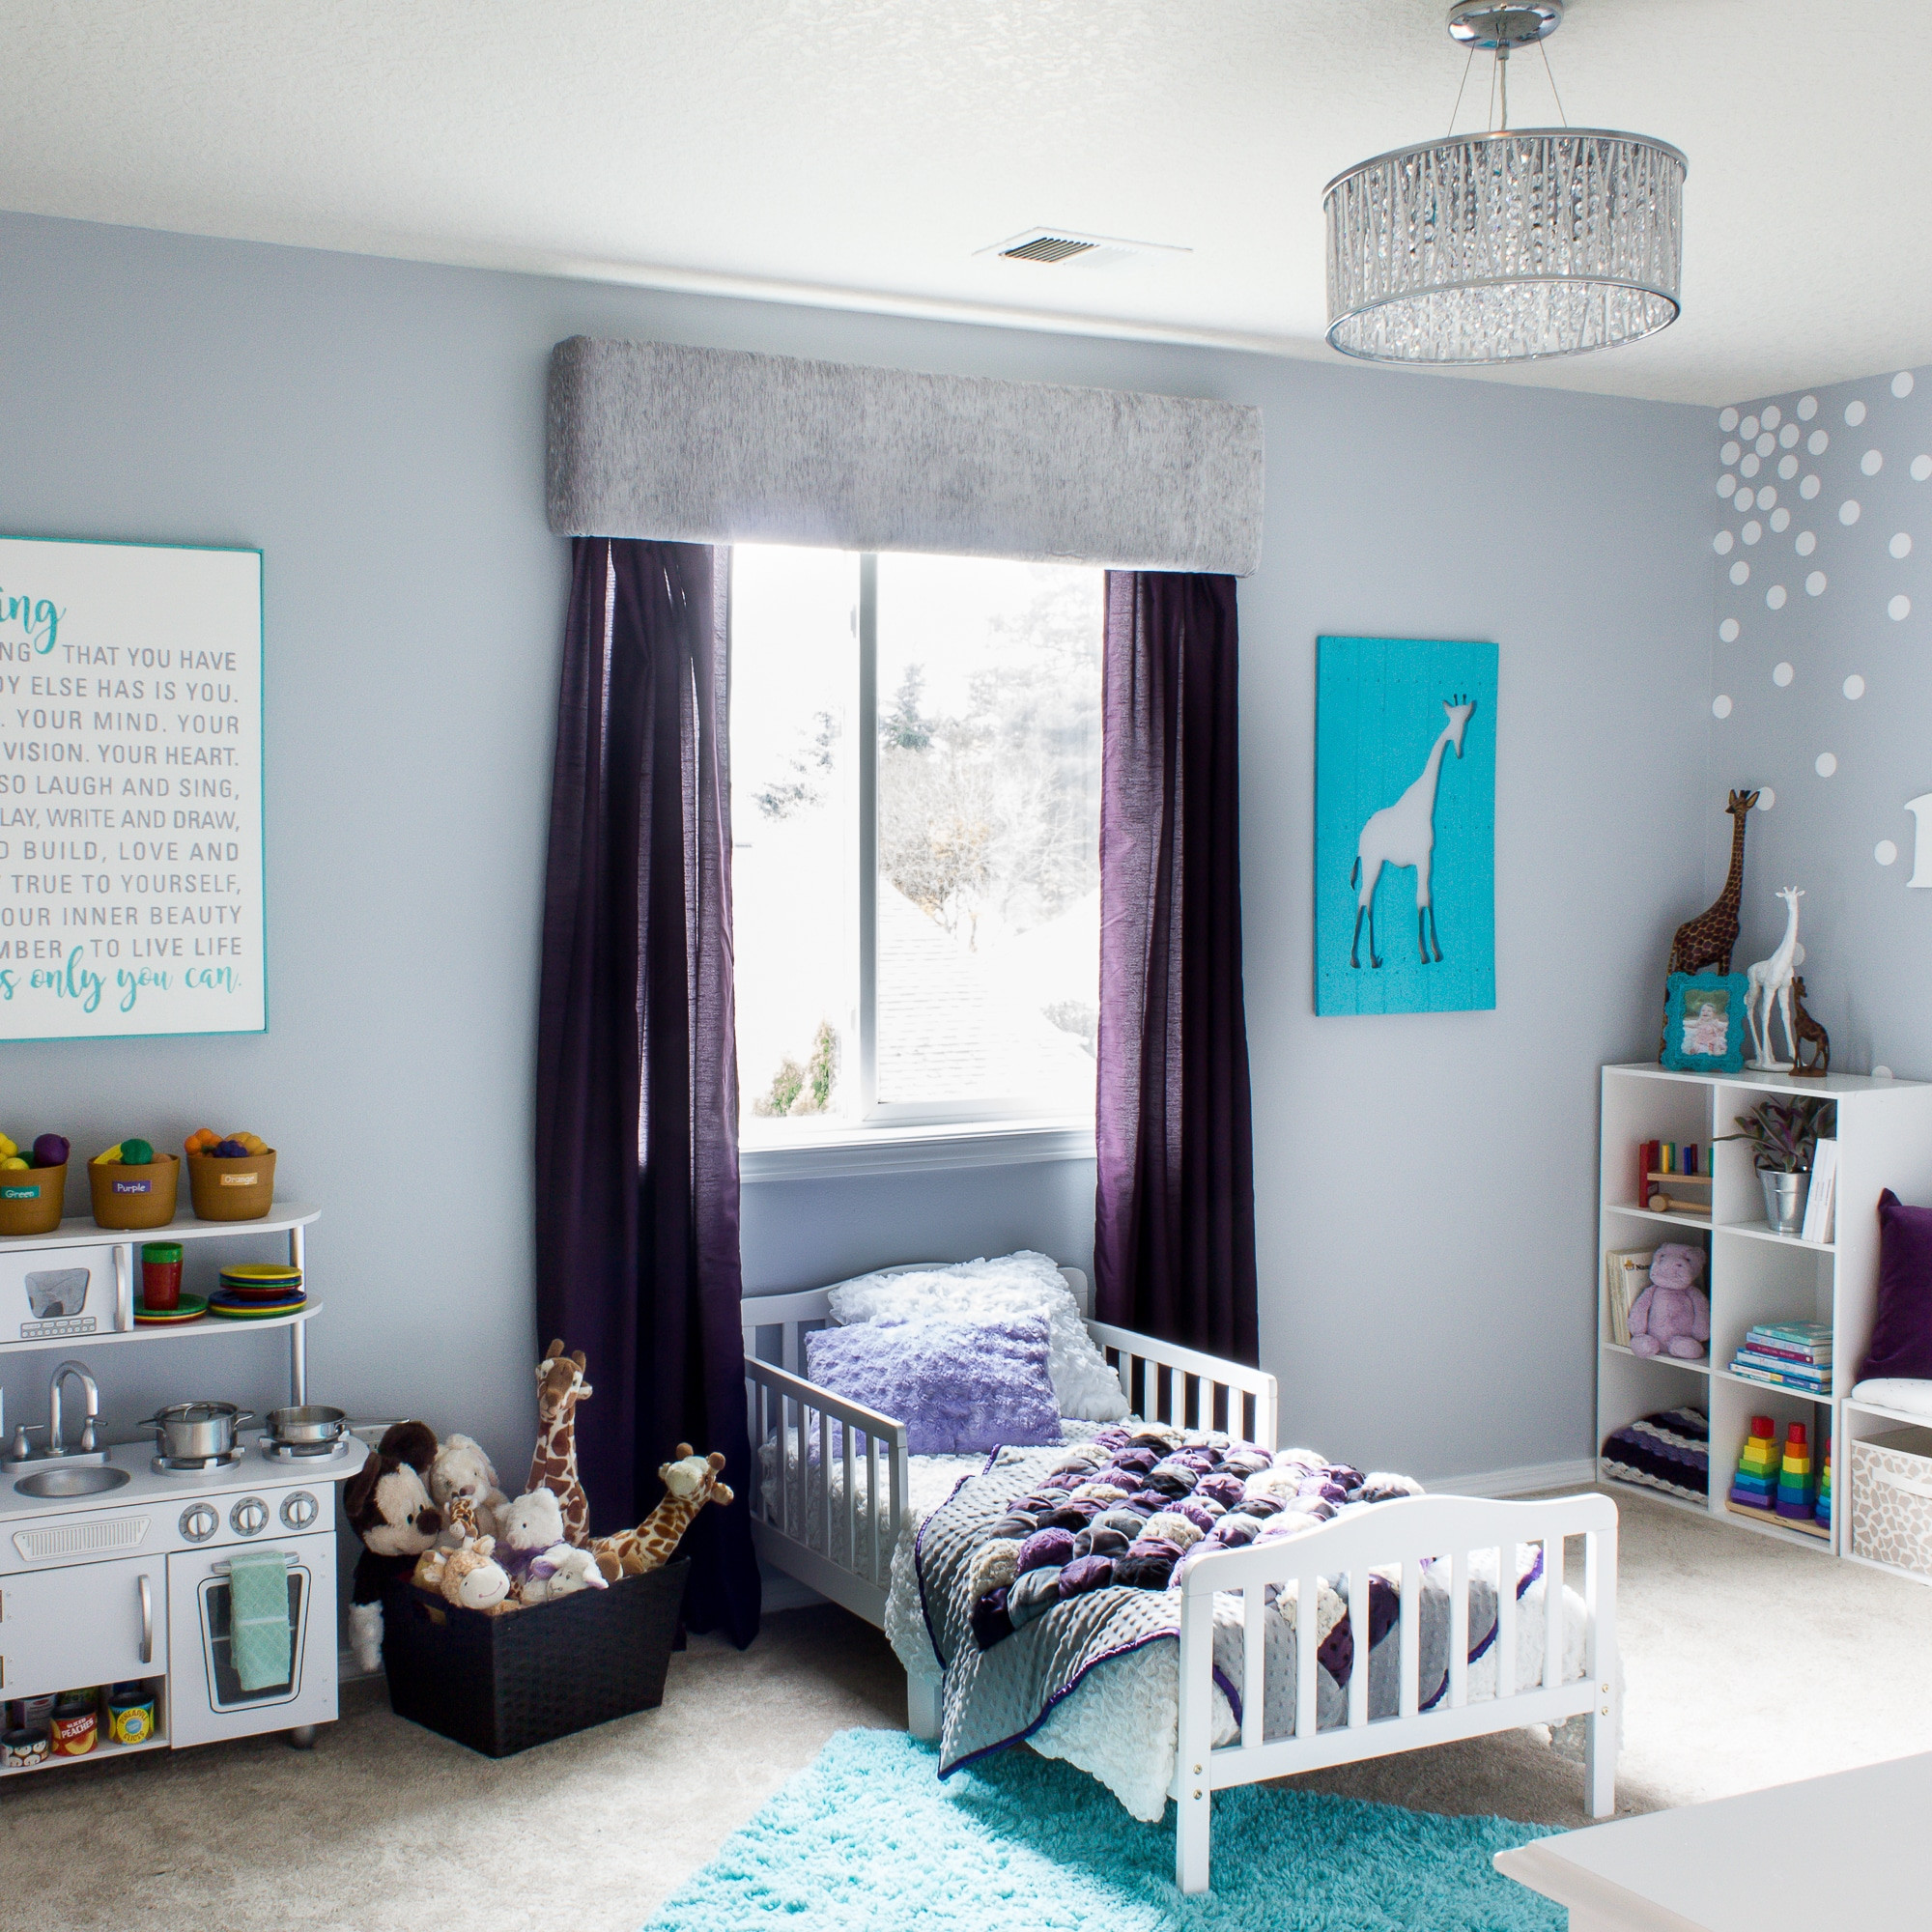 DIY Toddler Room Decor
 Cute Toddler Girl Room Ideas with may DIY decor tutorials